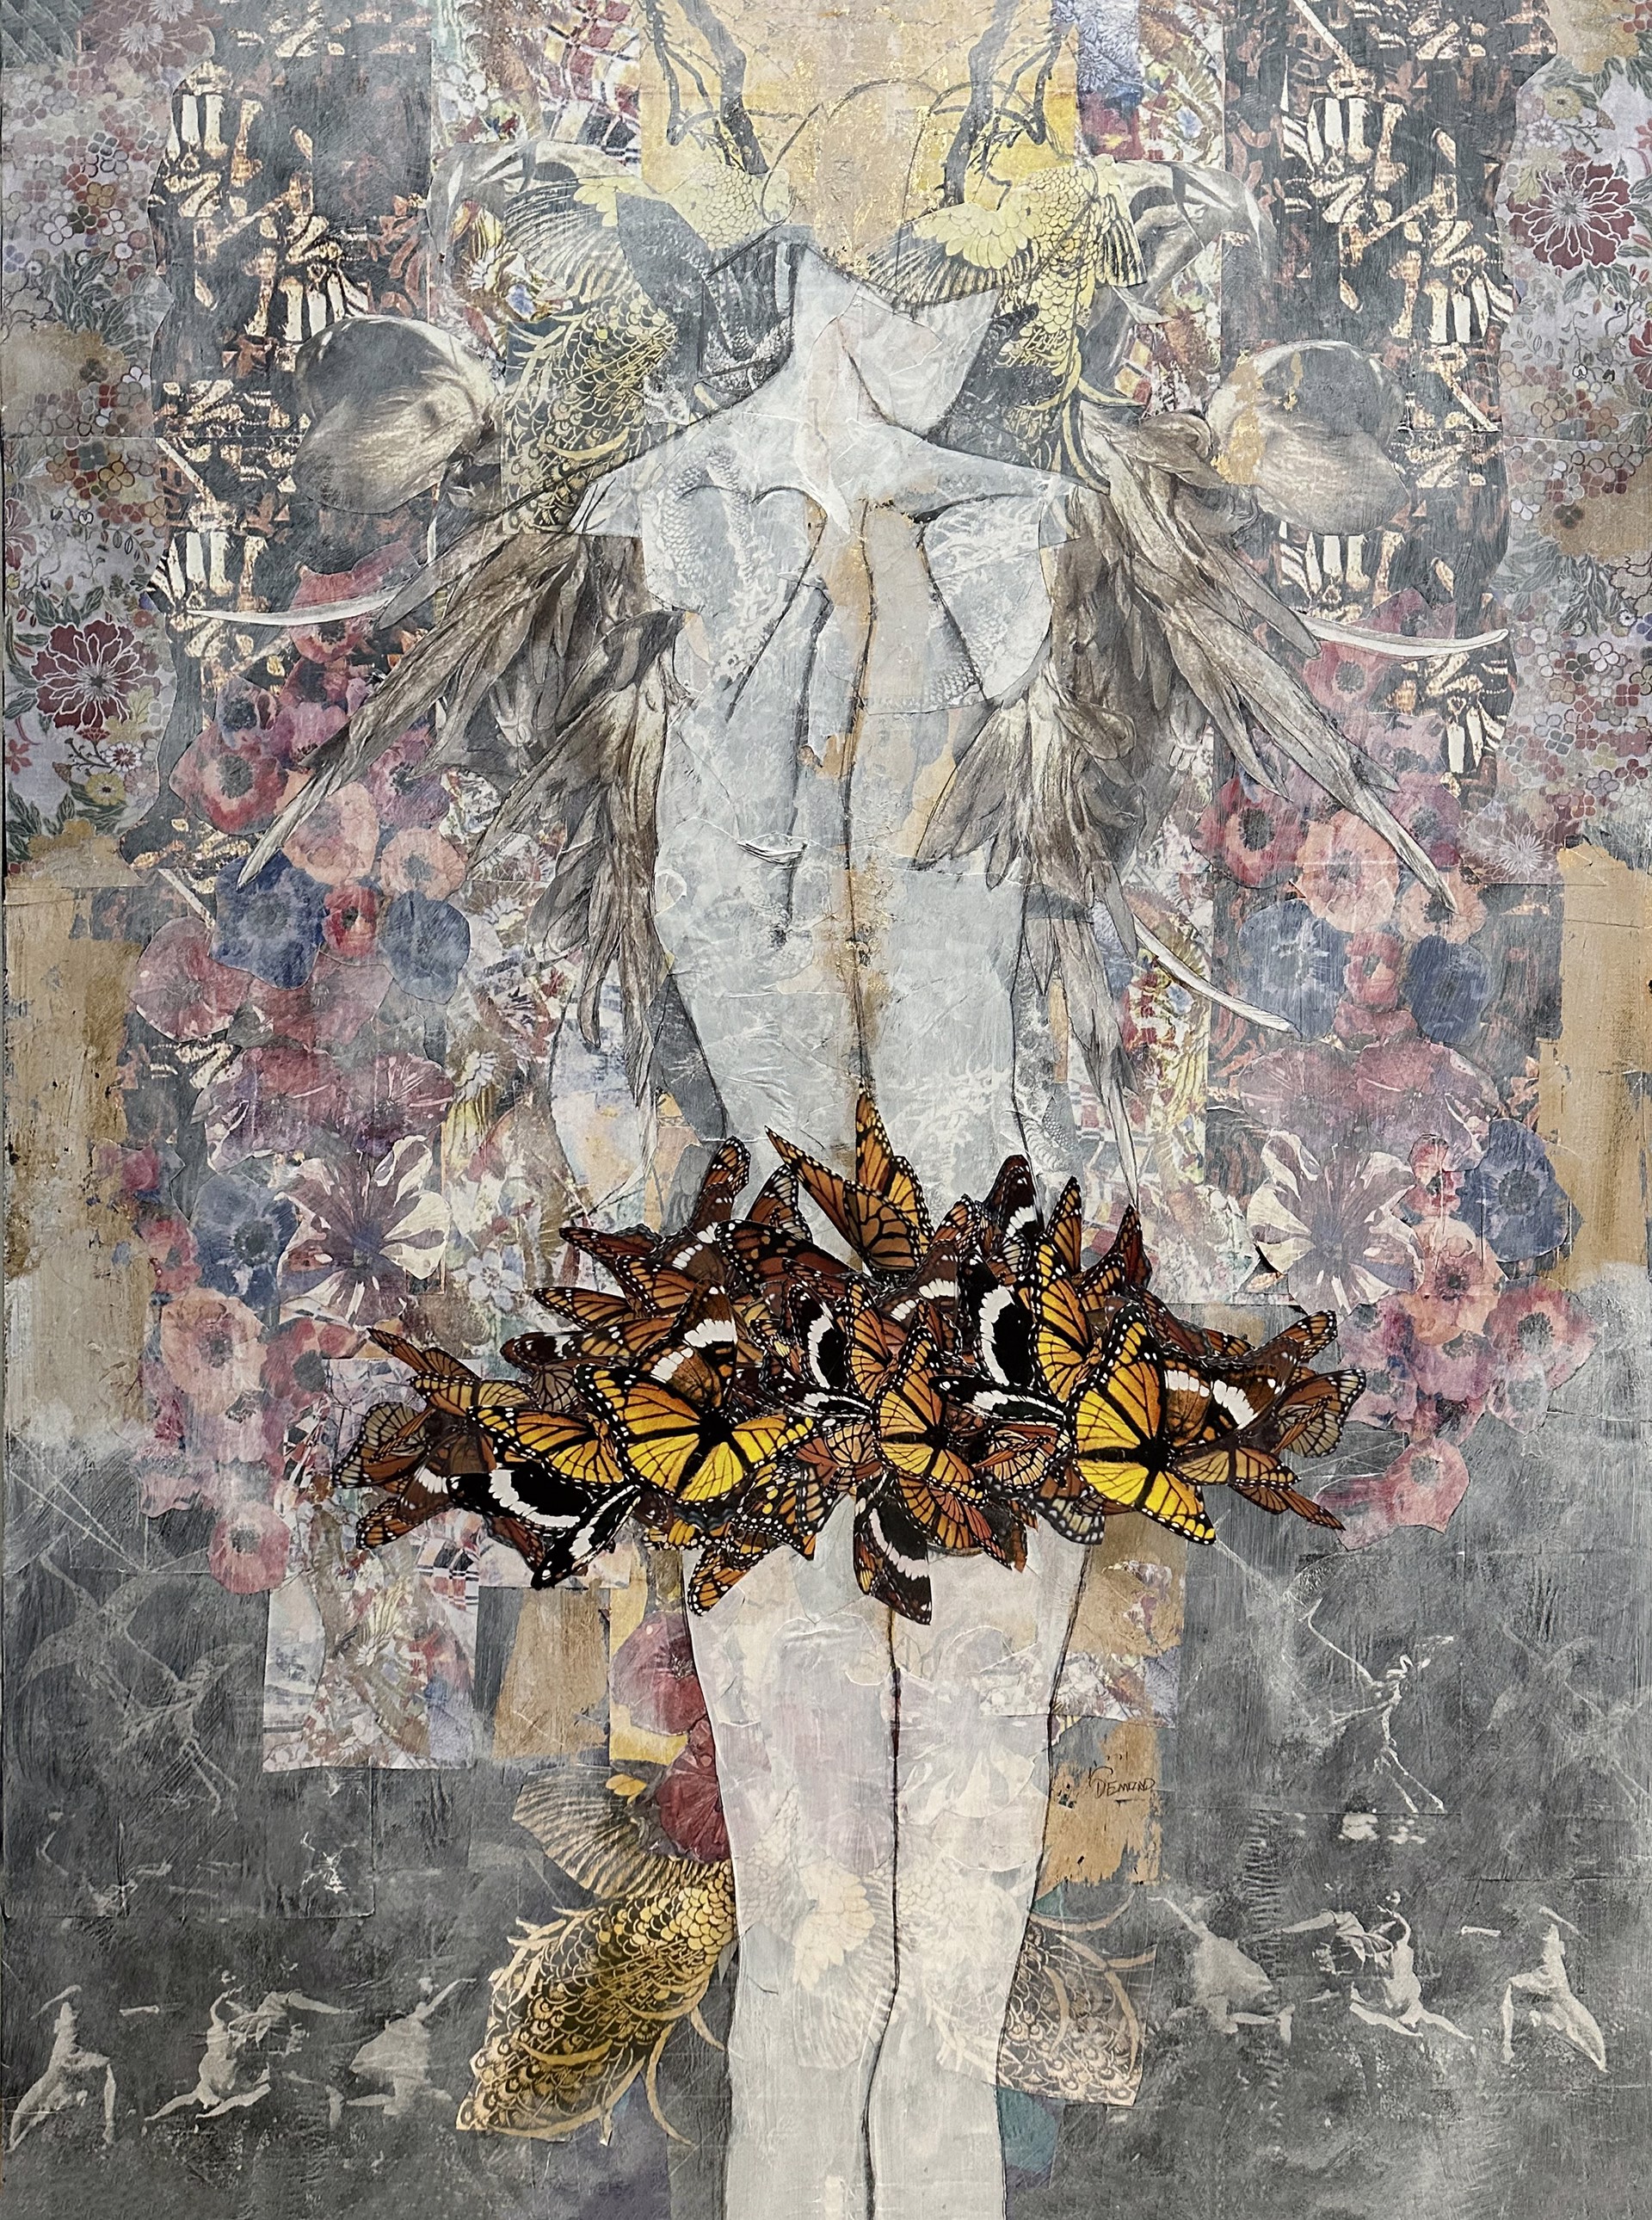 Butterfly Girl by Demond Matsuo